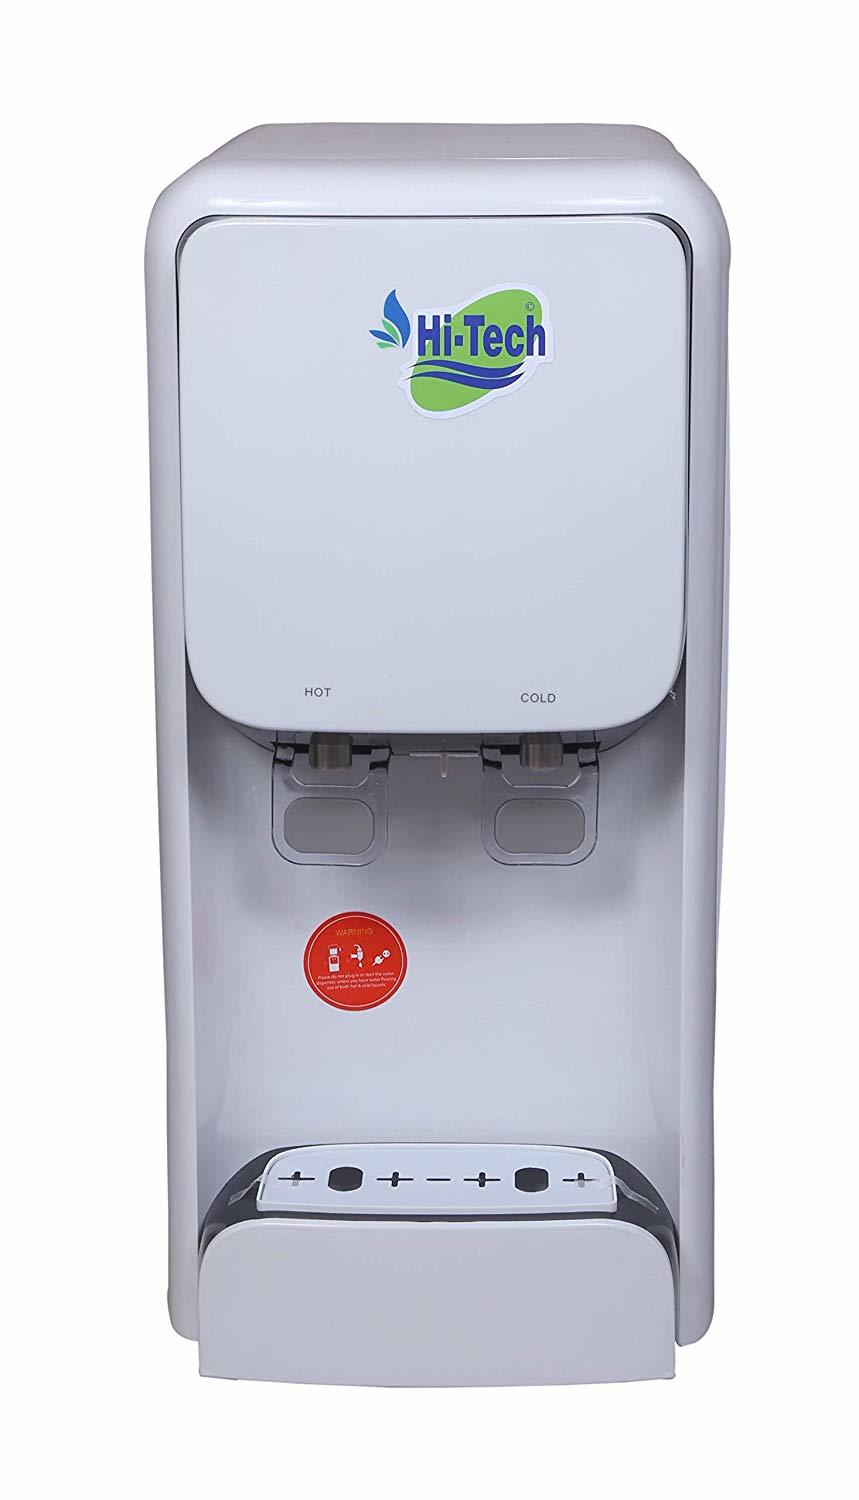 Fusion CT RO Water Dispenser